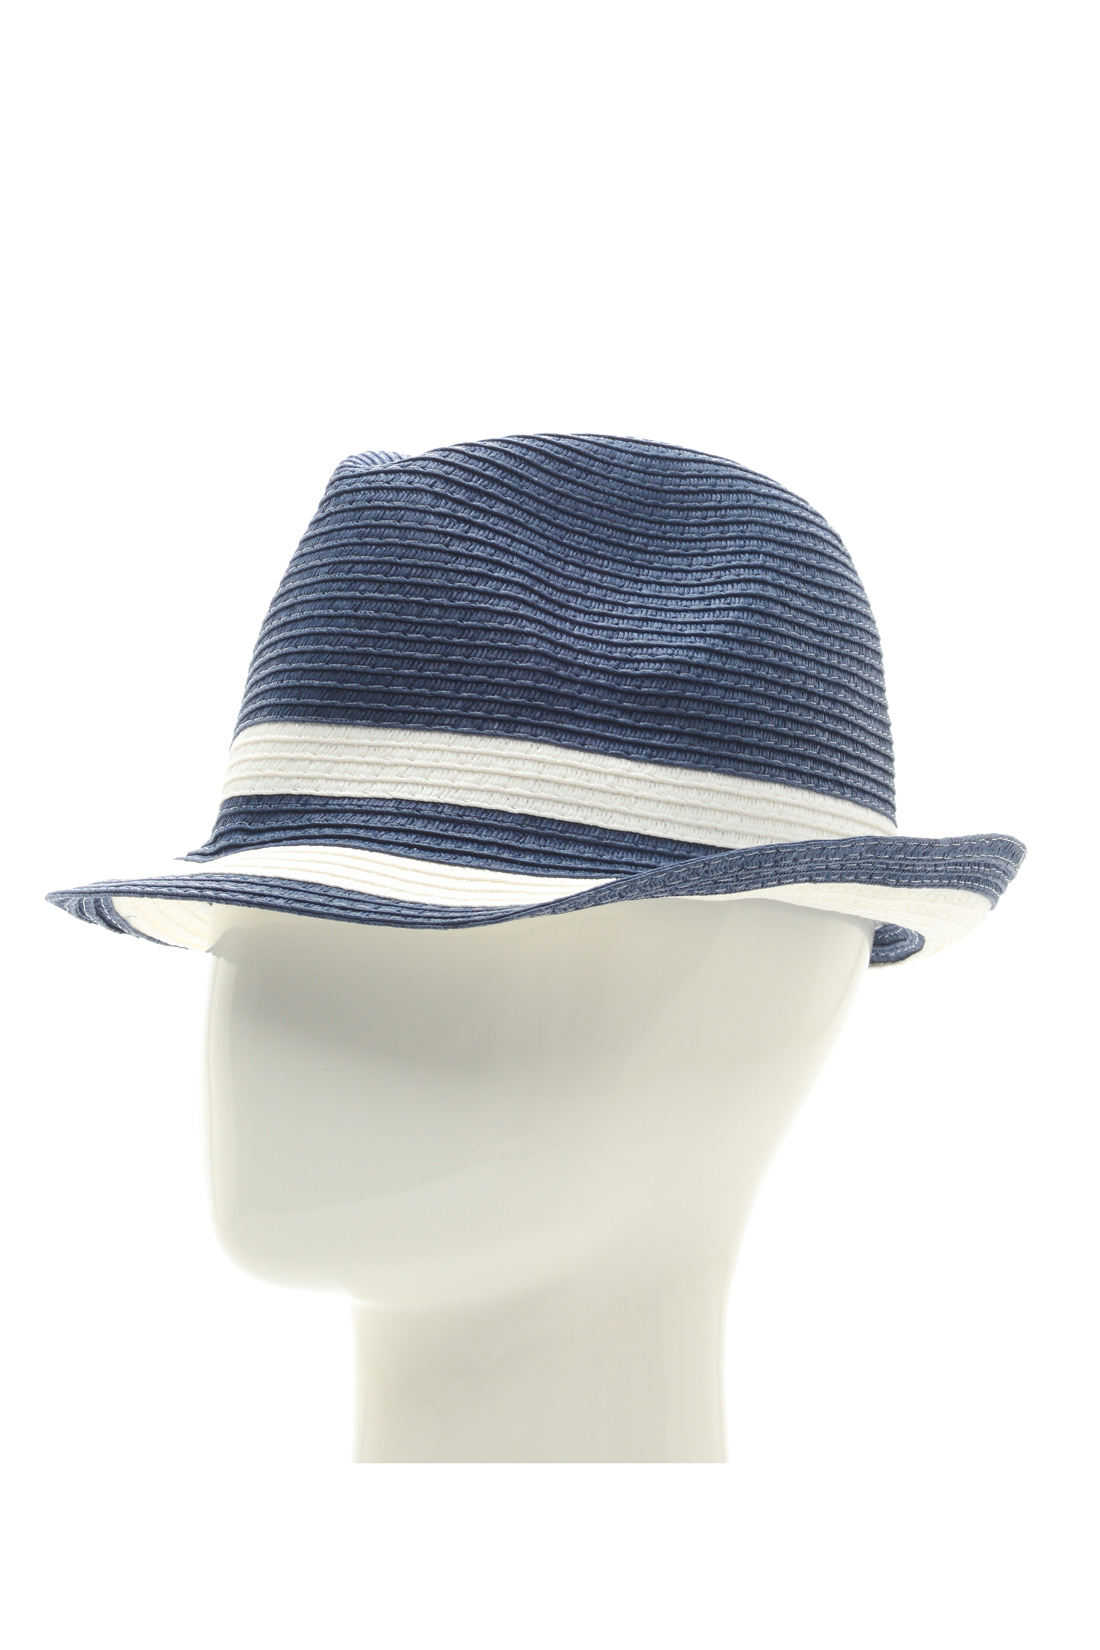 Шляпа в морском стиле (арт. baon B348003), размер Б/р 56, цвет синий